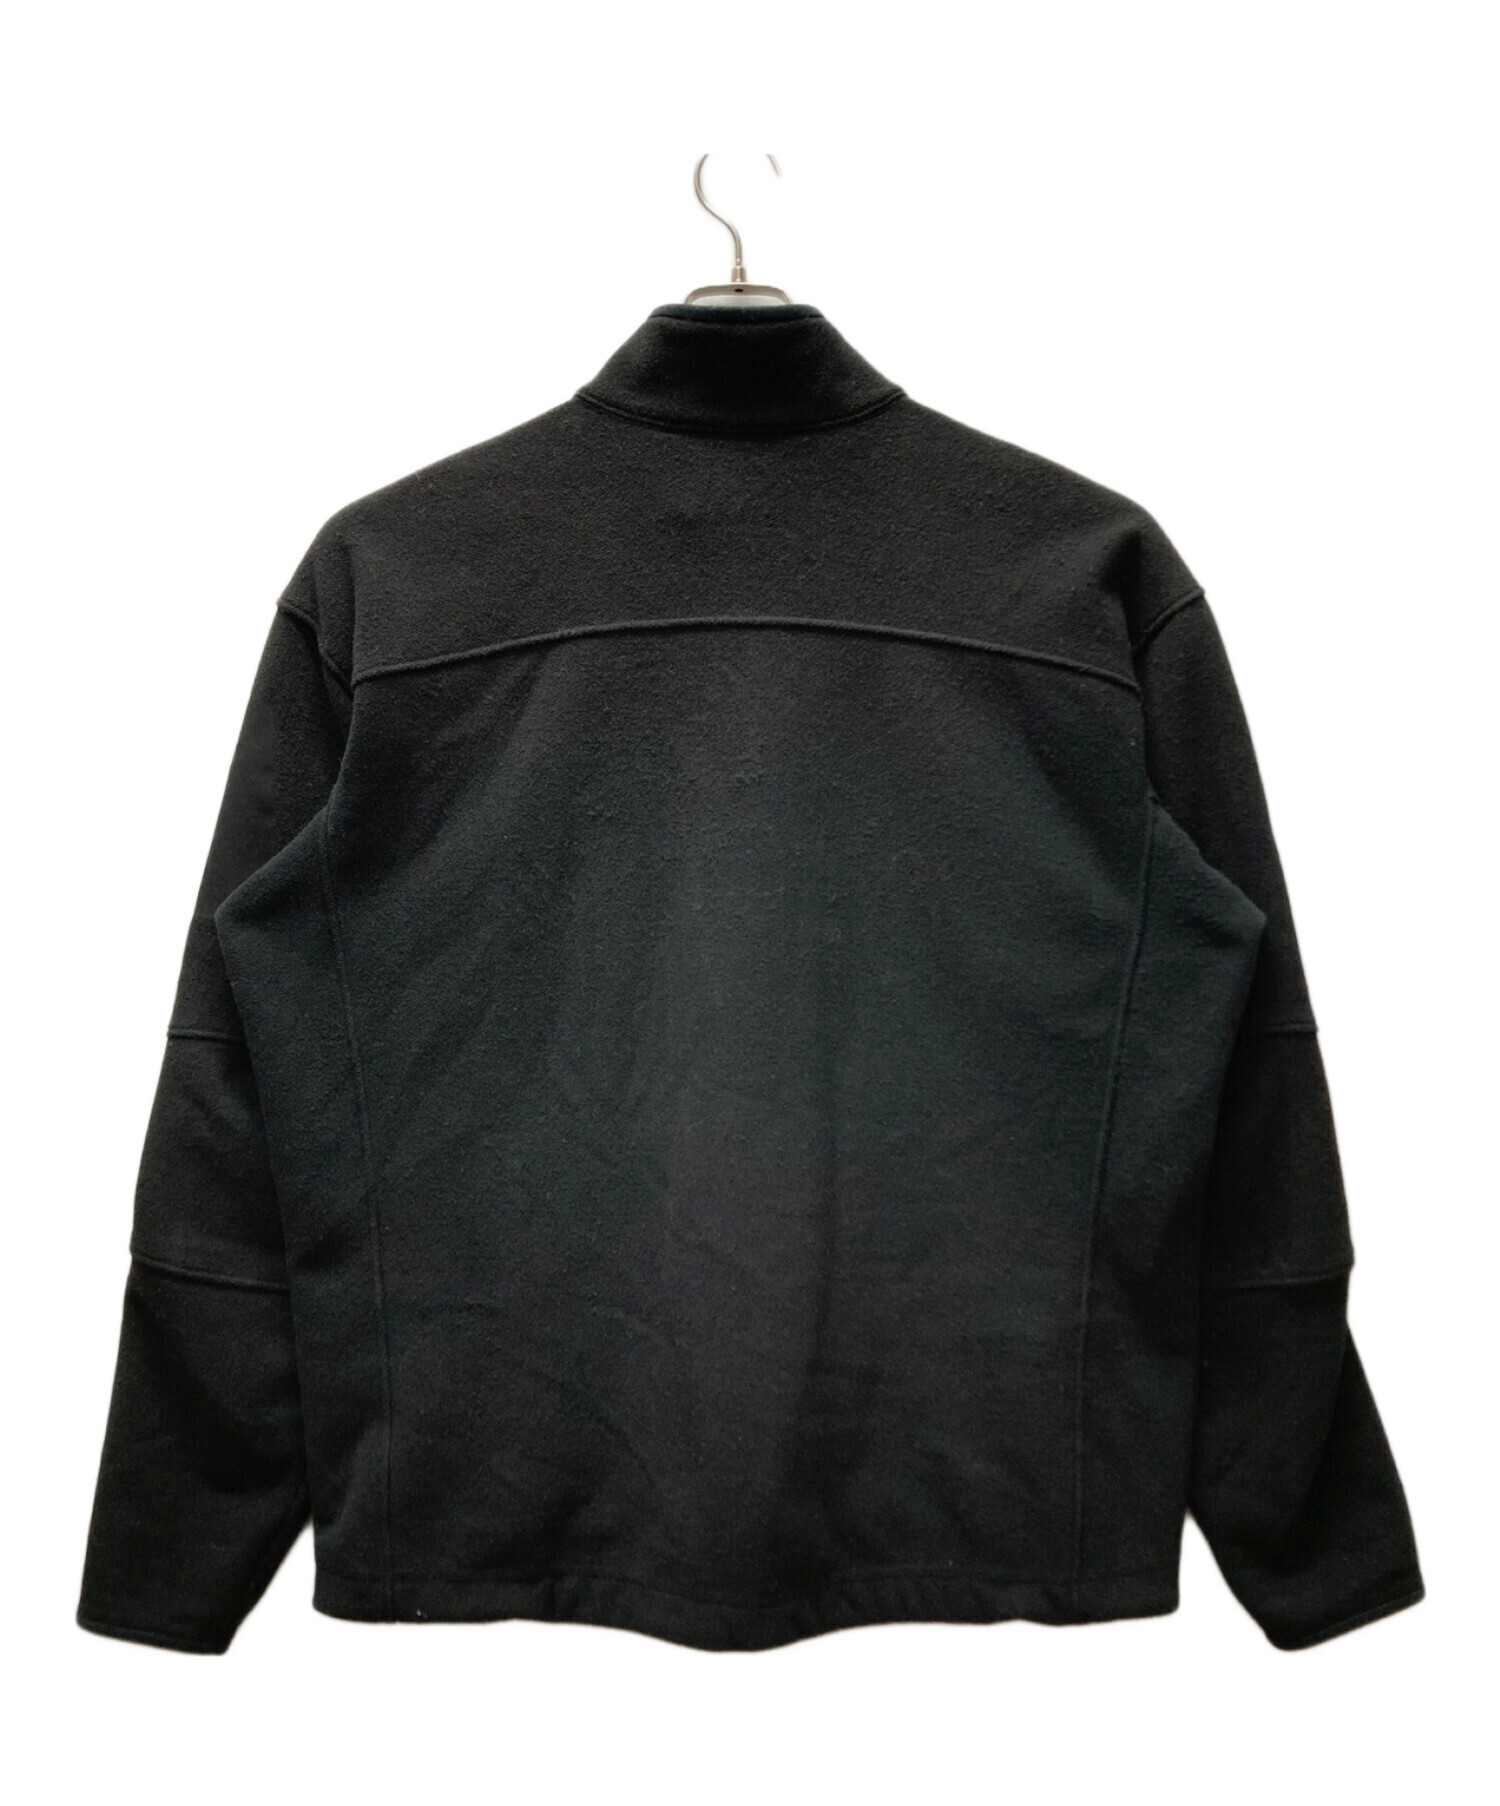 ARC'TERYX (アークテリクス) フリースジャケット ブラック サイズ:XL